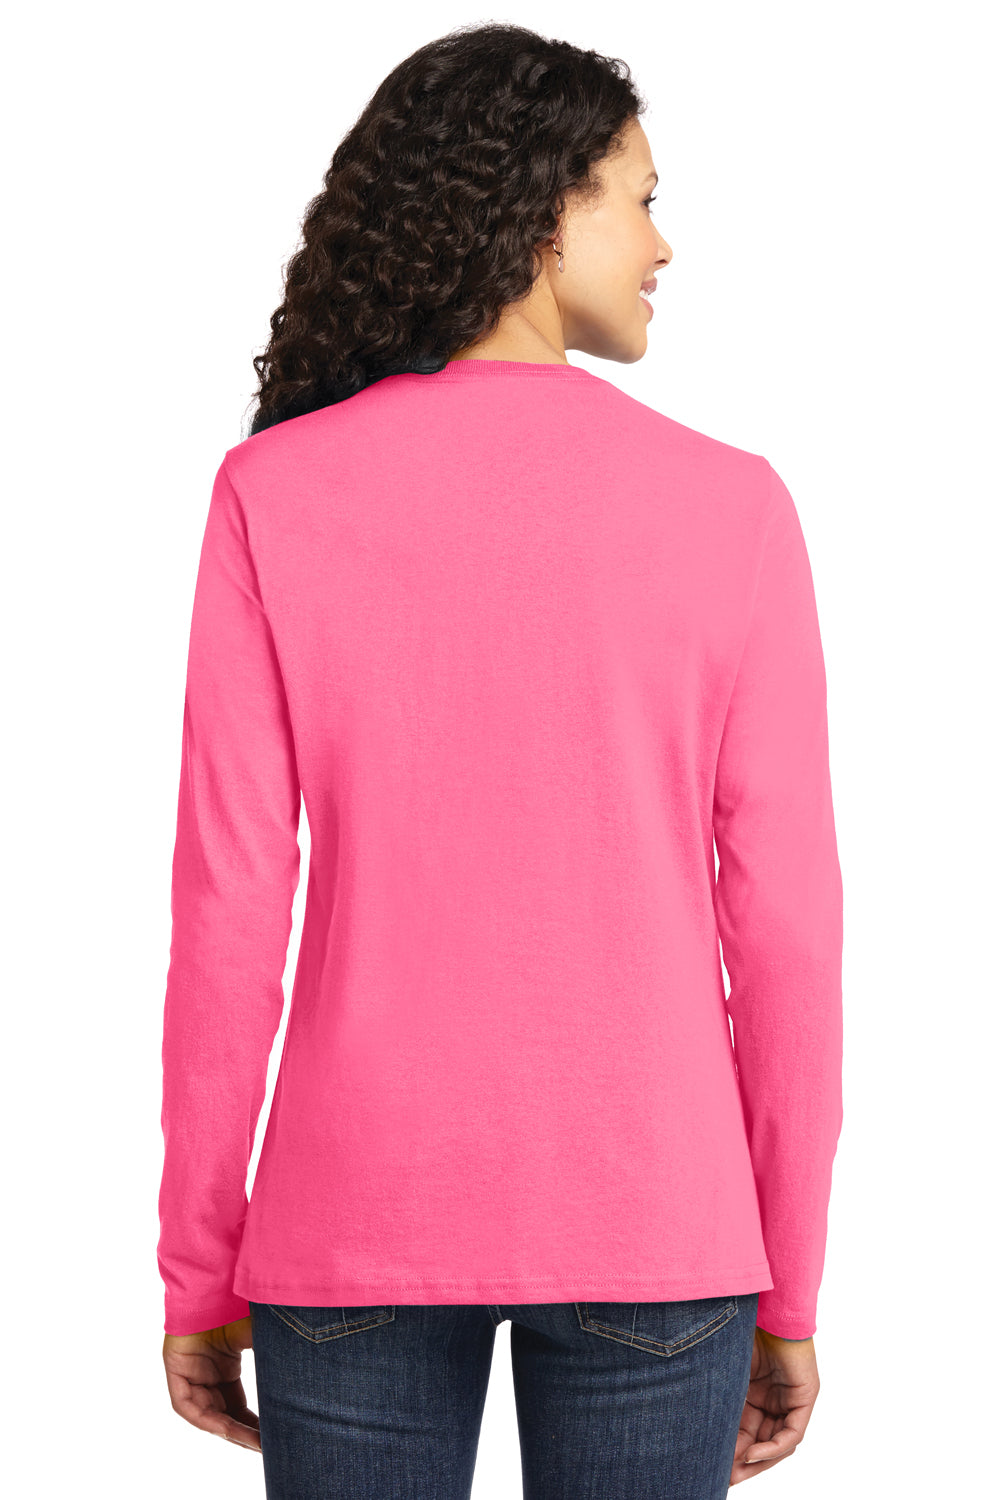 Port & Company LPC54LS Womens Core Long Sleeve Crewneck T-Shirt Neon Pink Back